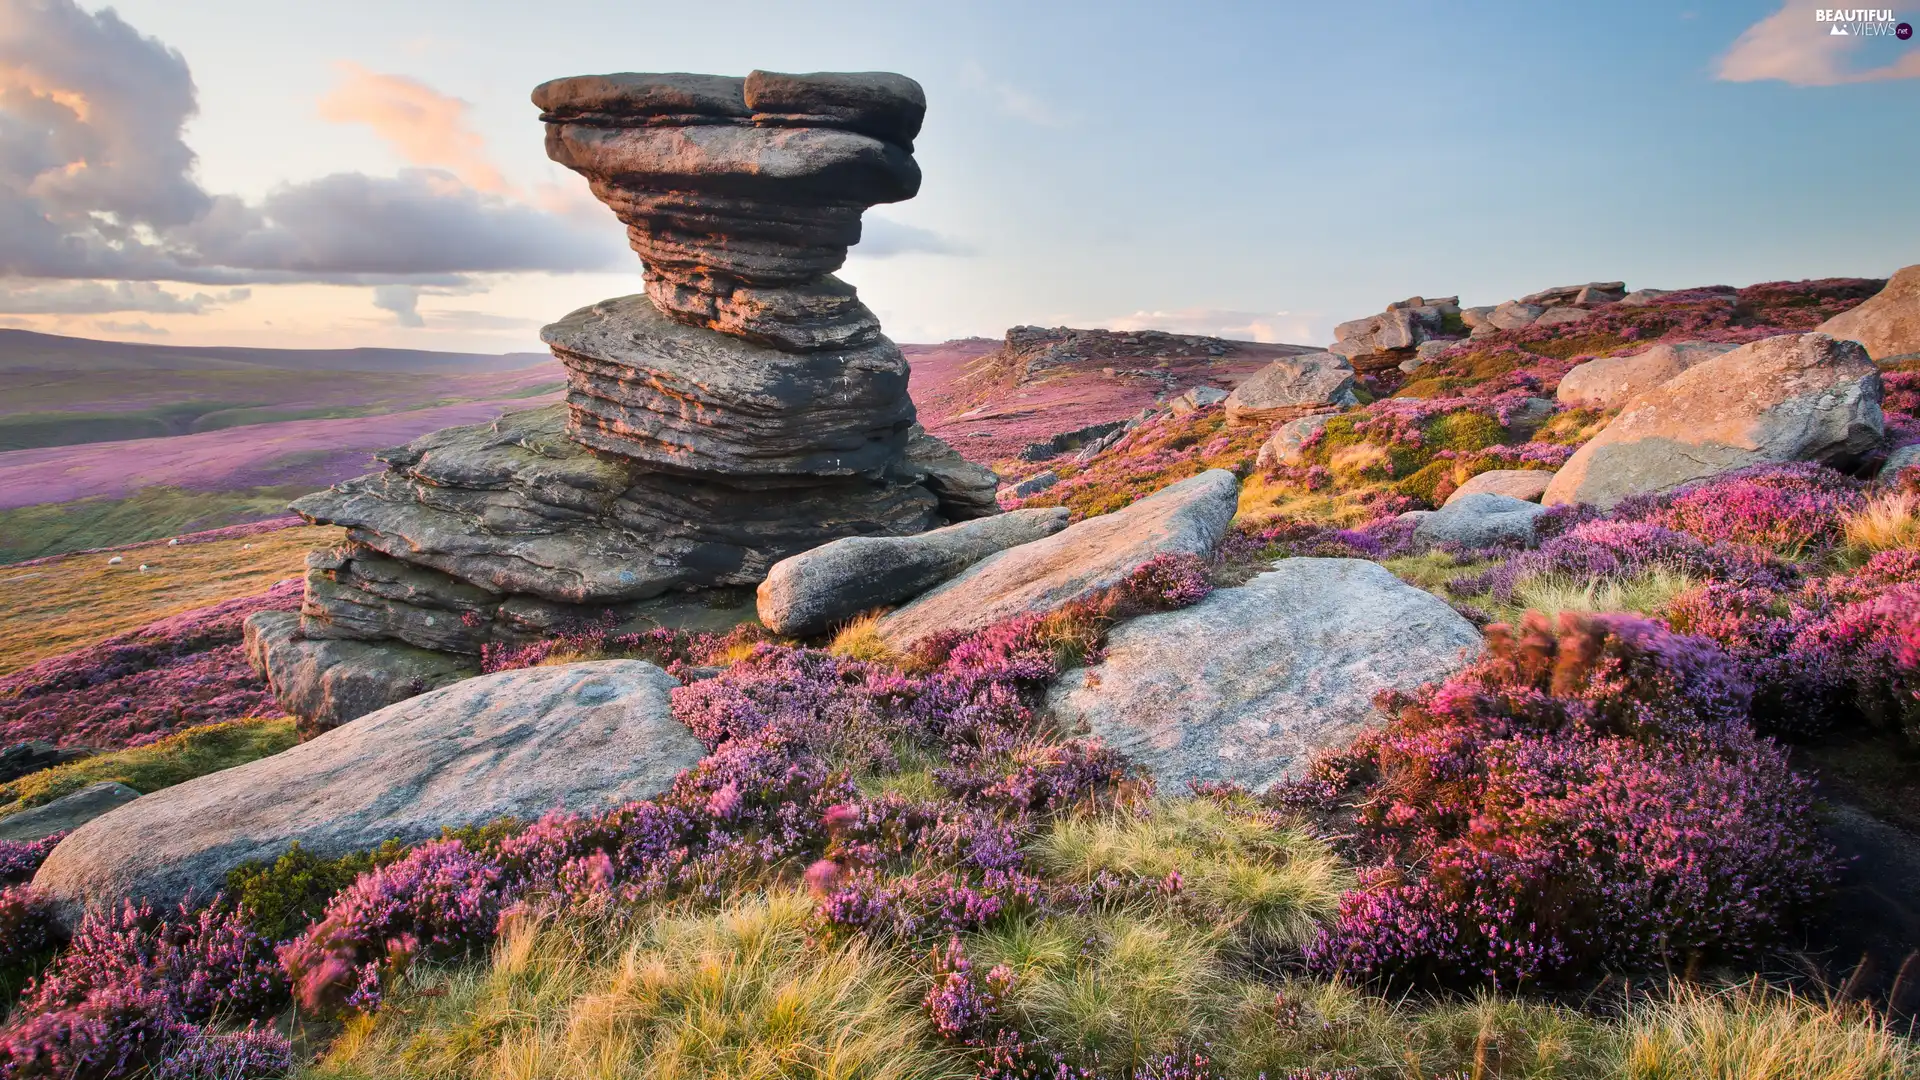 rocks, Stones, England, Peak District National Park, County Derbyshire, Hill, heath, Salt Cellar Rock Formation